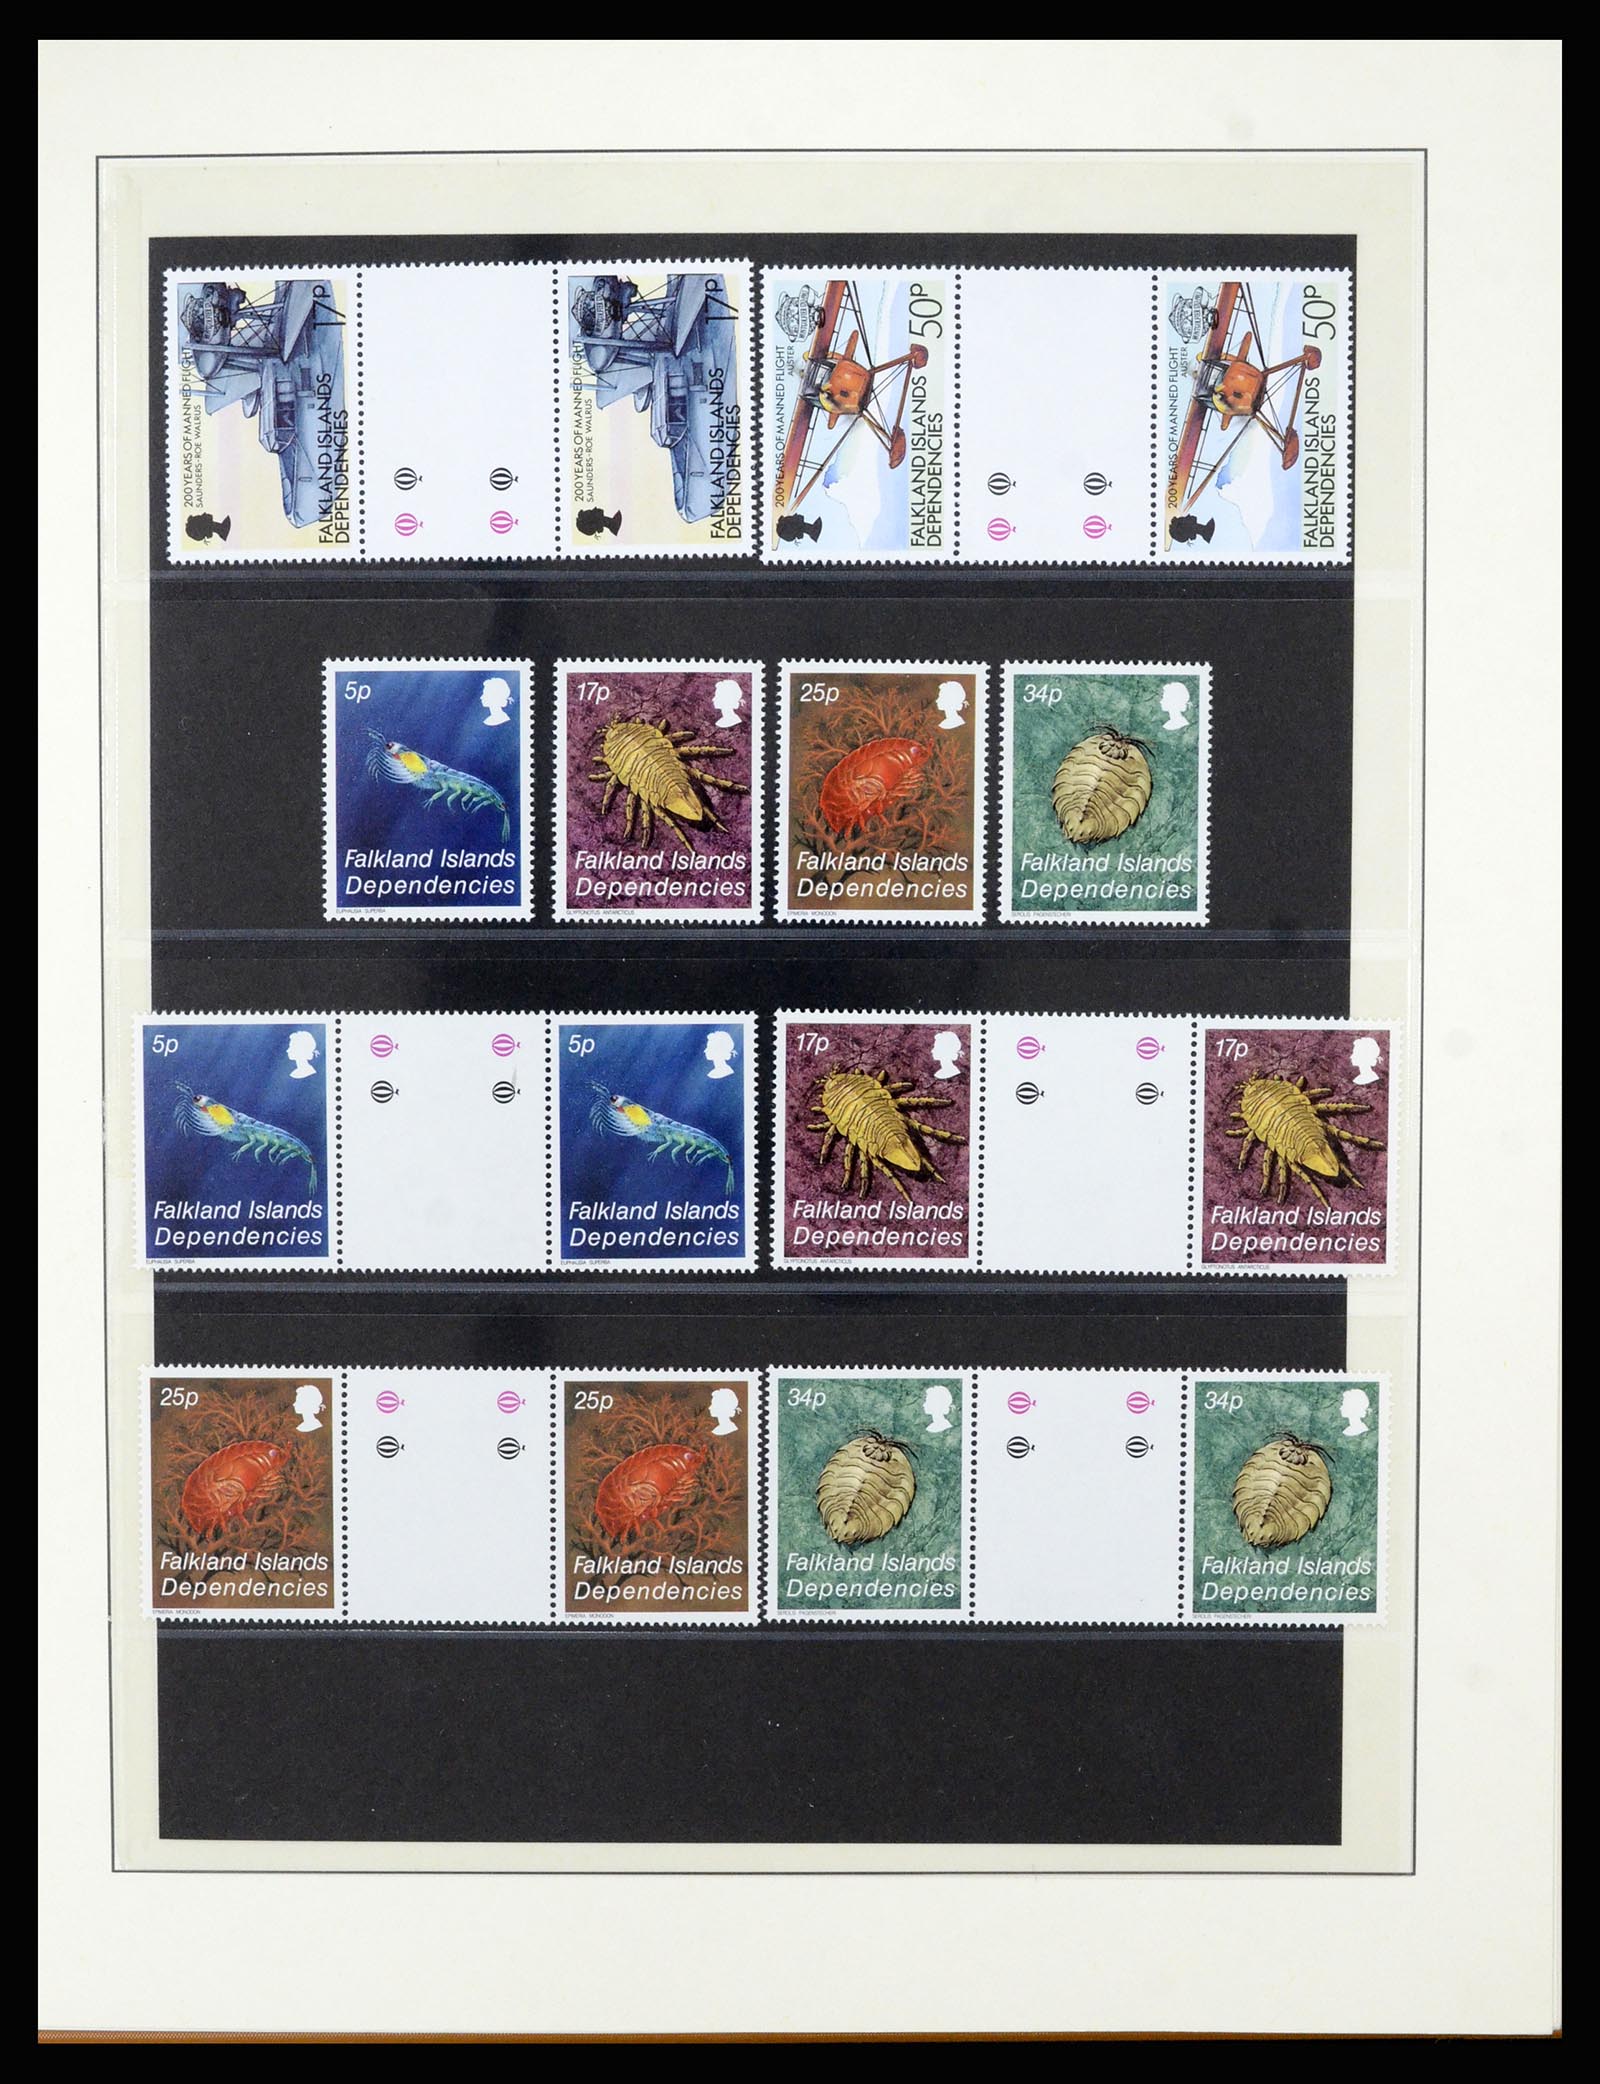 36929 019 - Stamp collection 36929 Falkland Islands dependencies 1944-1997.